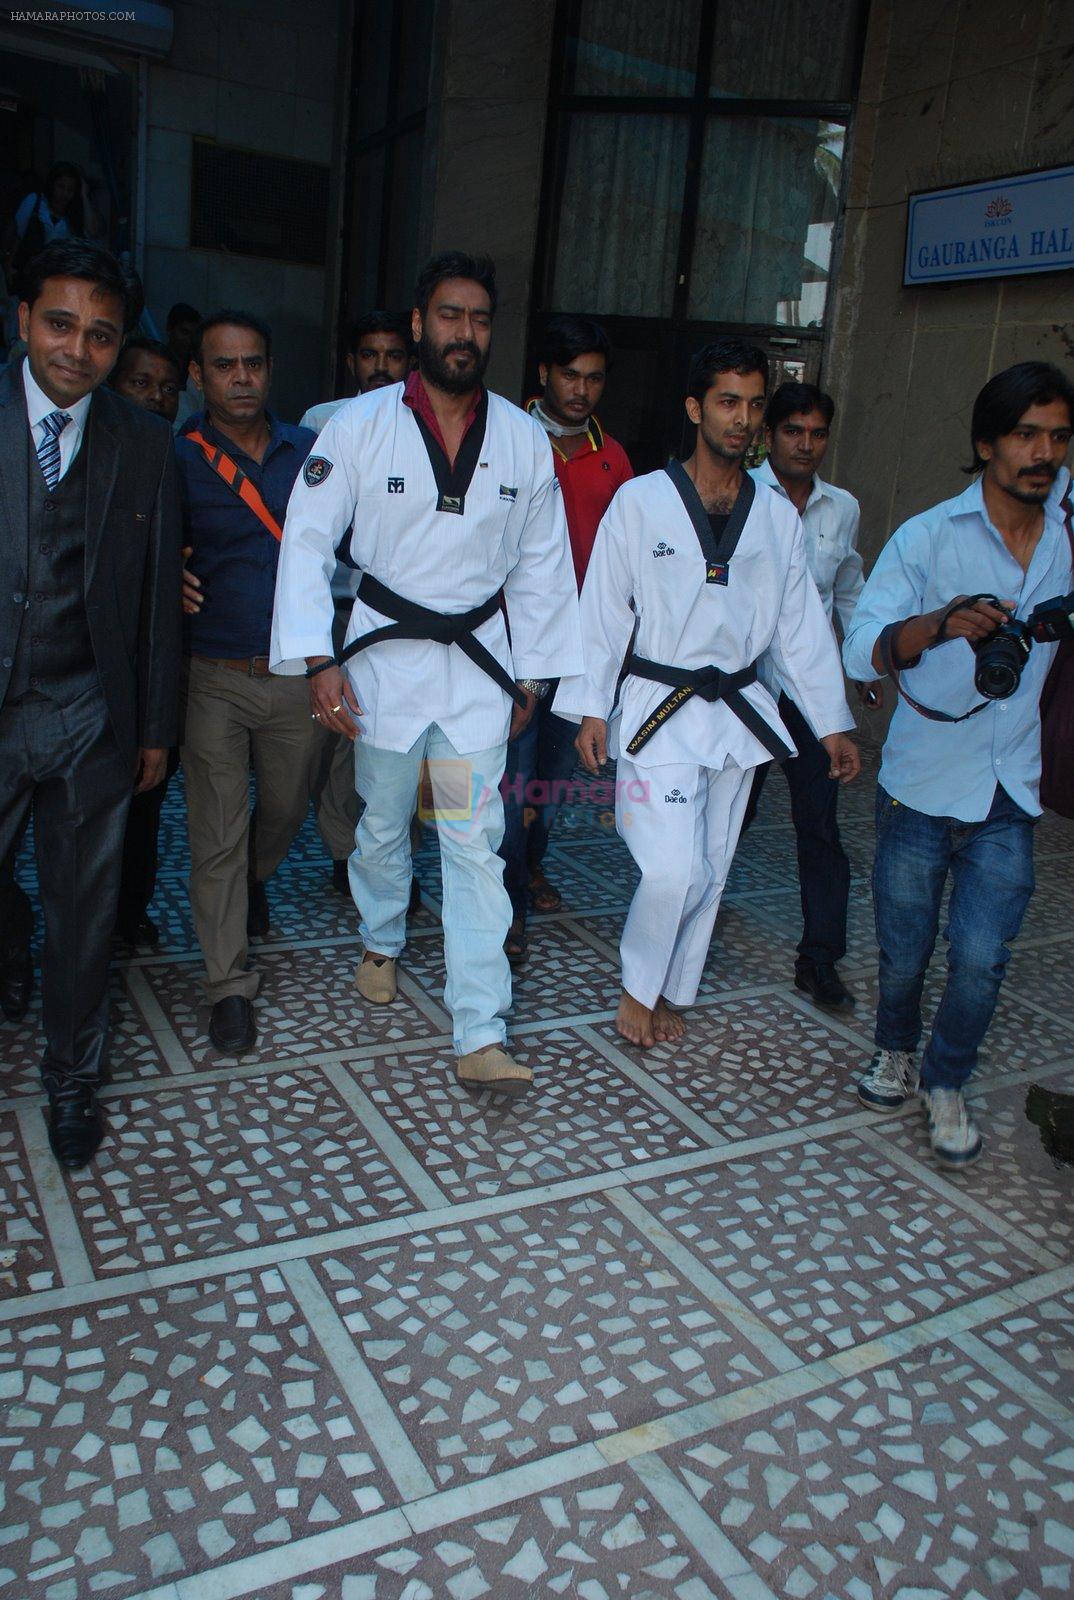 Ajay Devgan was felicitated by Taekwondo Masters from Korea in Mumbai on 22nd Nov 2014